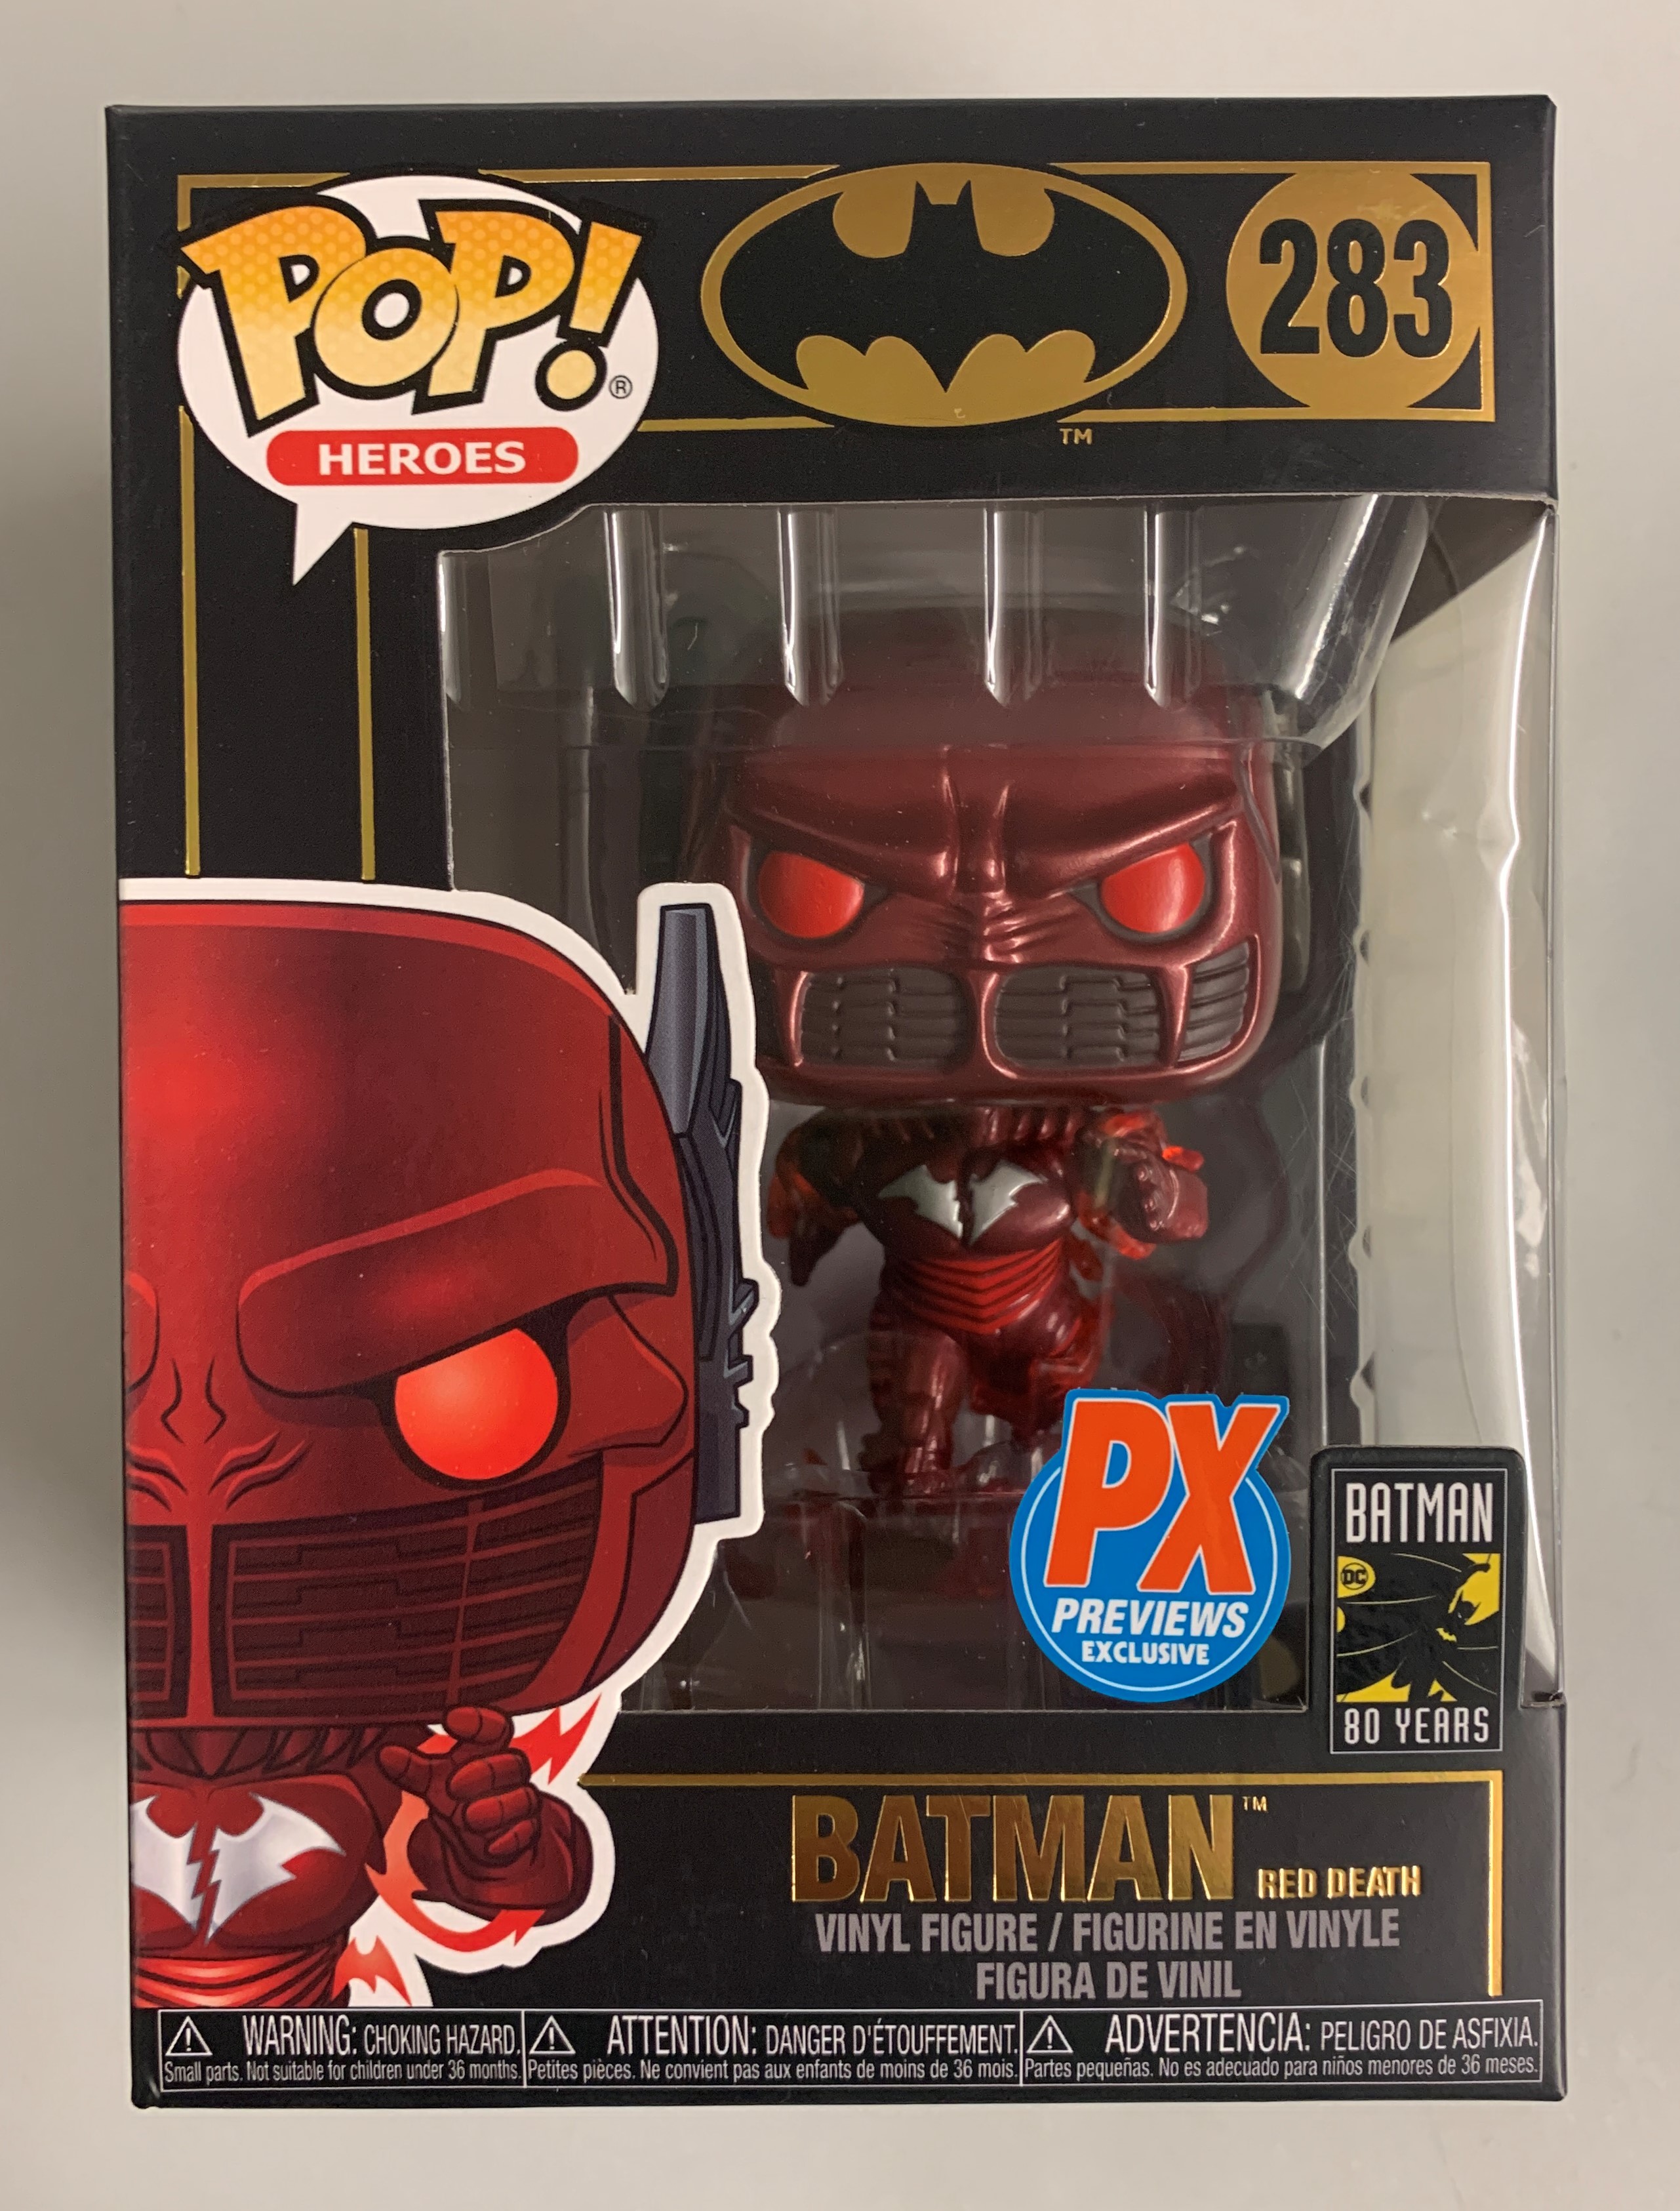 Pop! Heroes Batman 80 Years - Batman Red Death (#283) PX Previews Exclusive (used, see description)